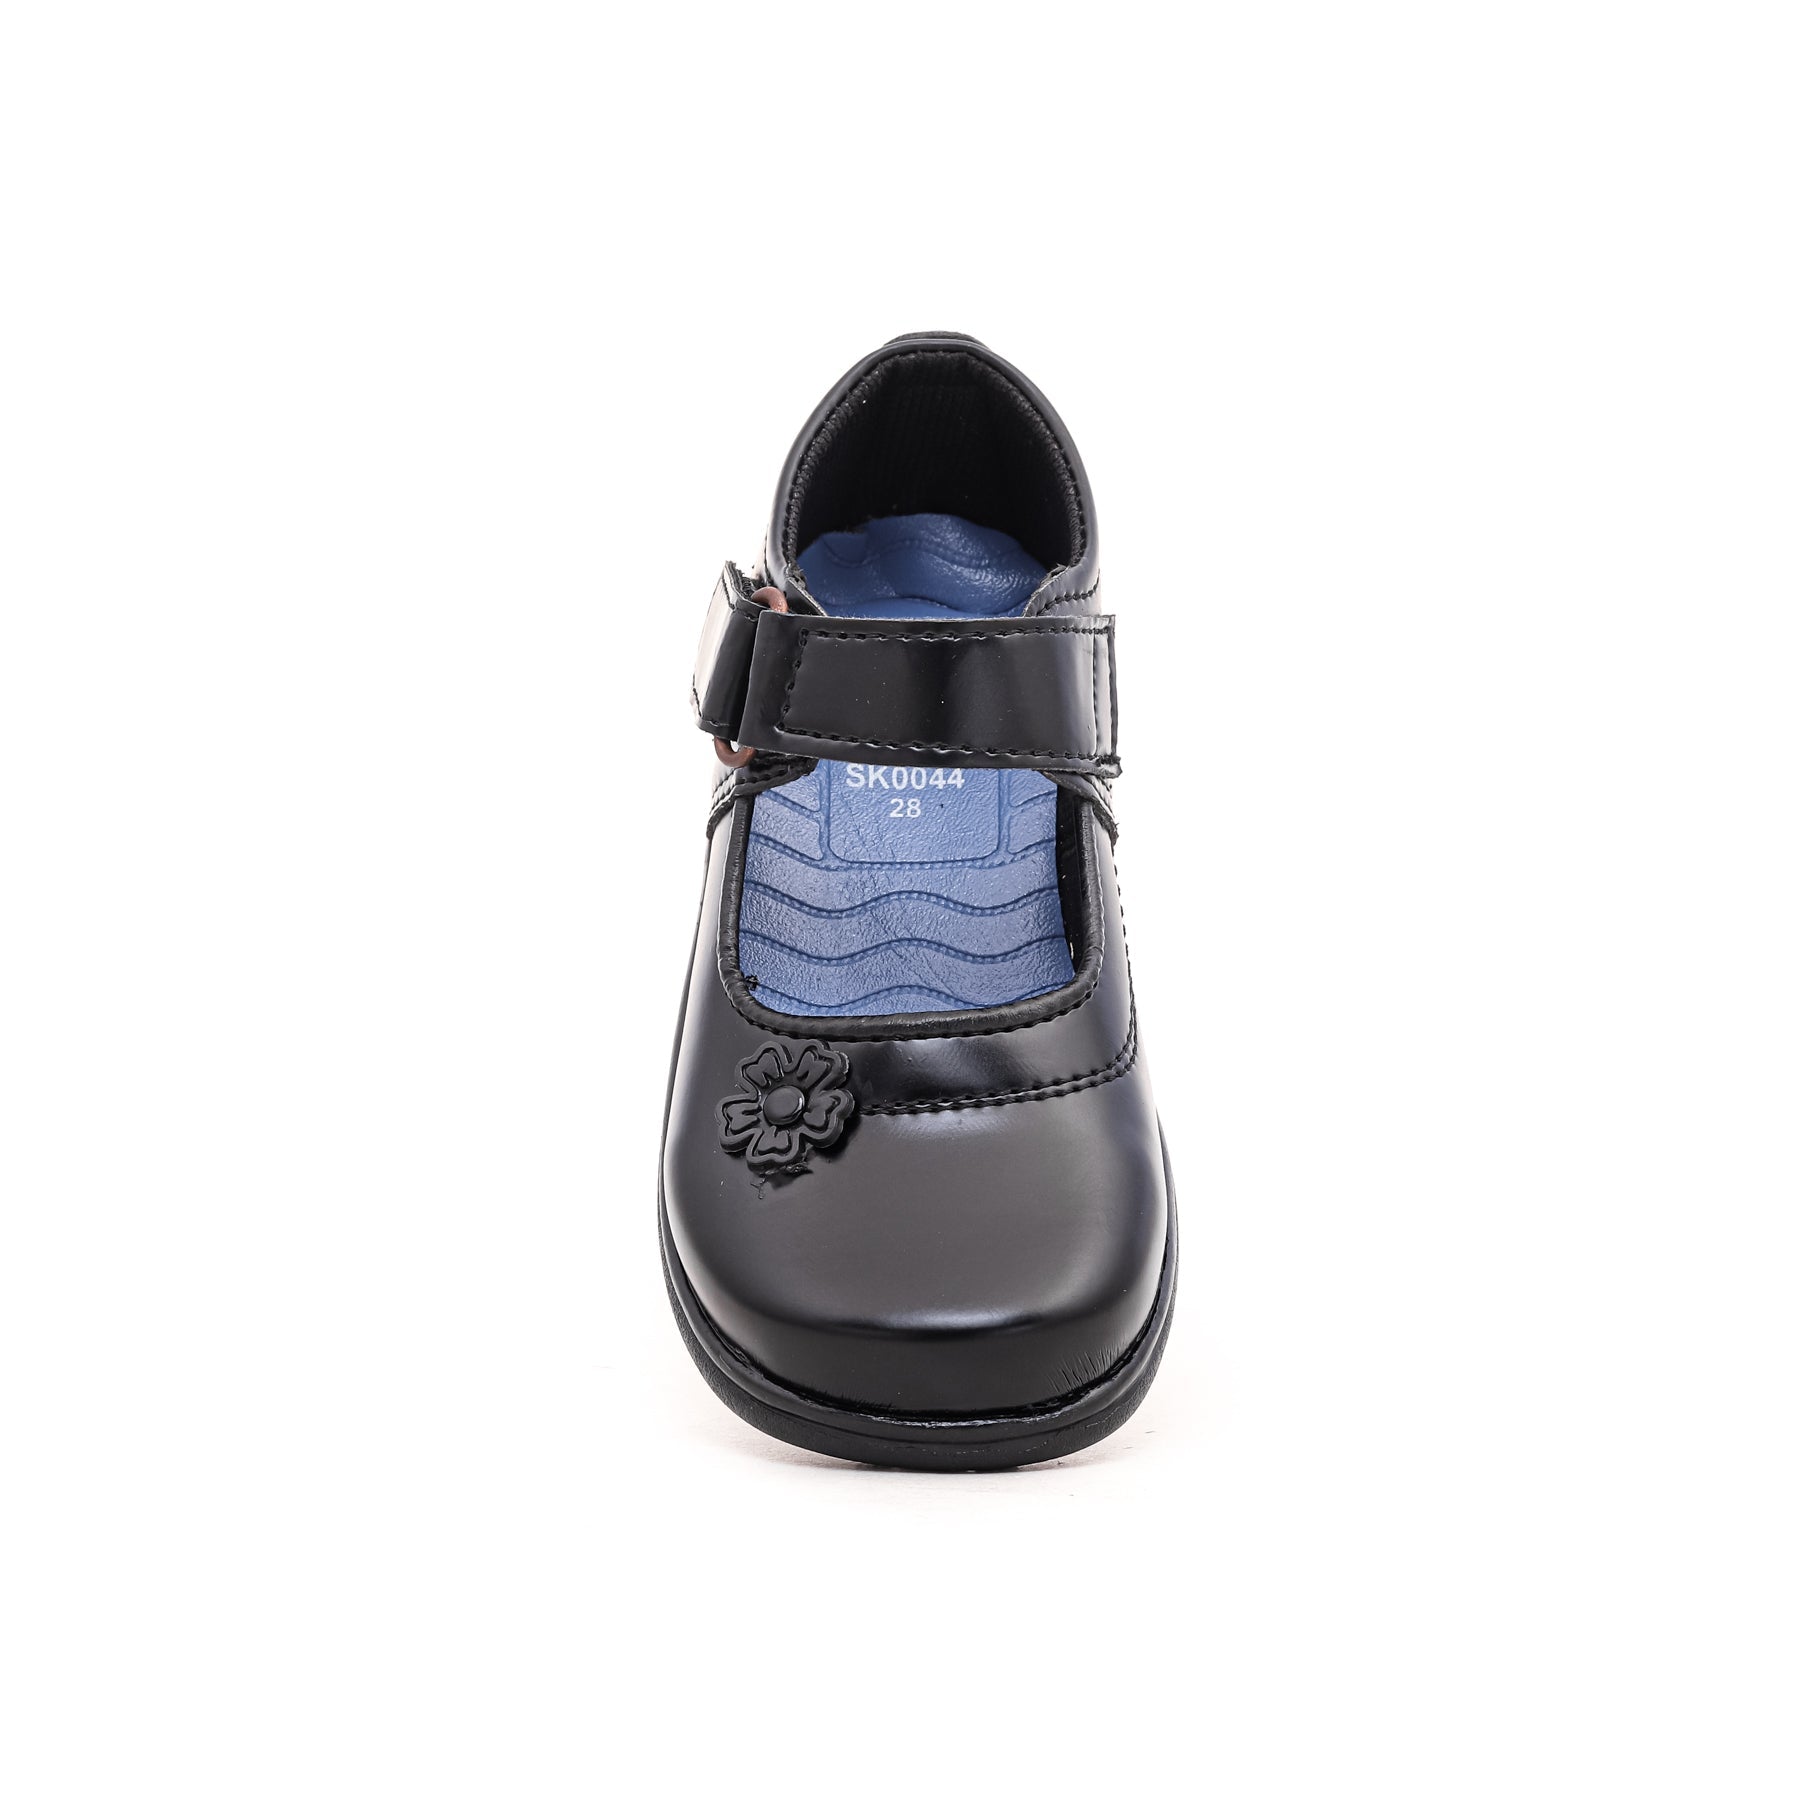 Girls Black School Shoes SK0044